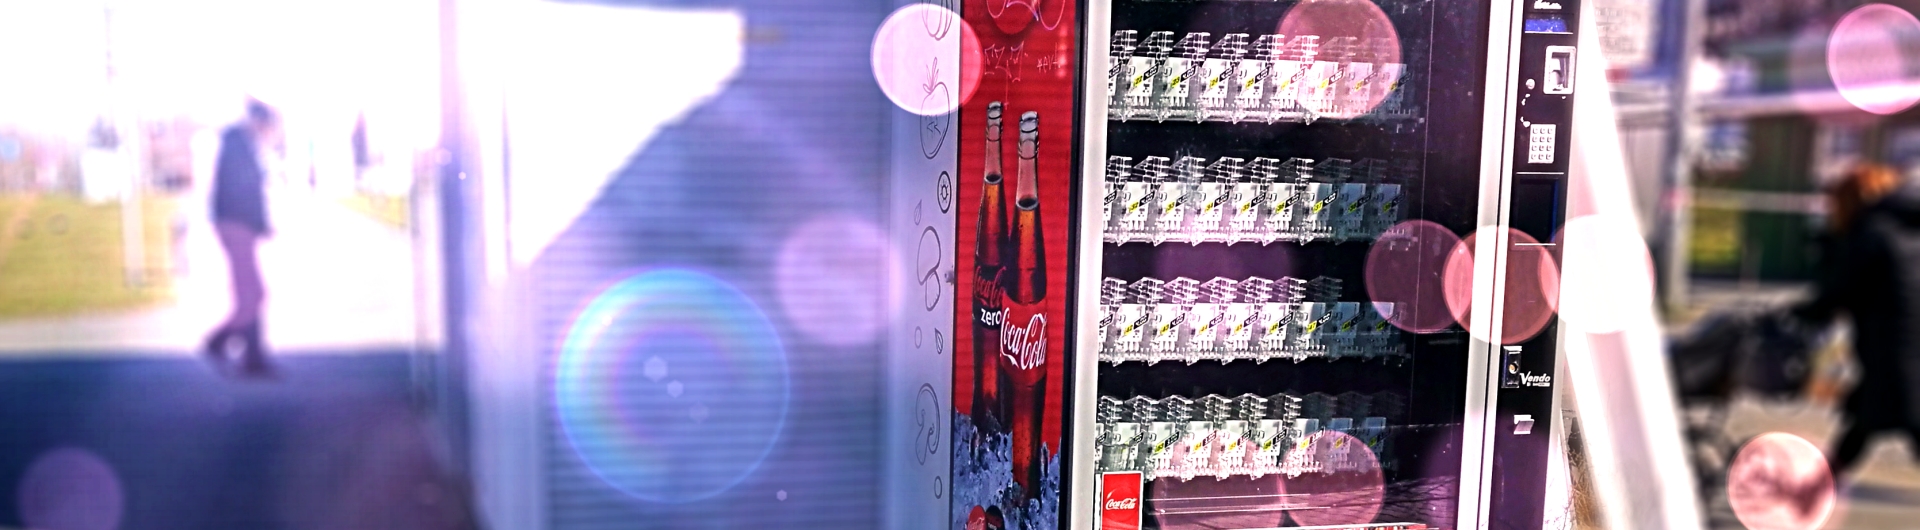 Coca-Cola i wielki mikrob strachu